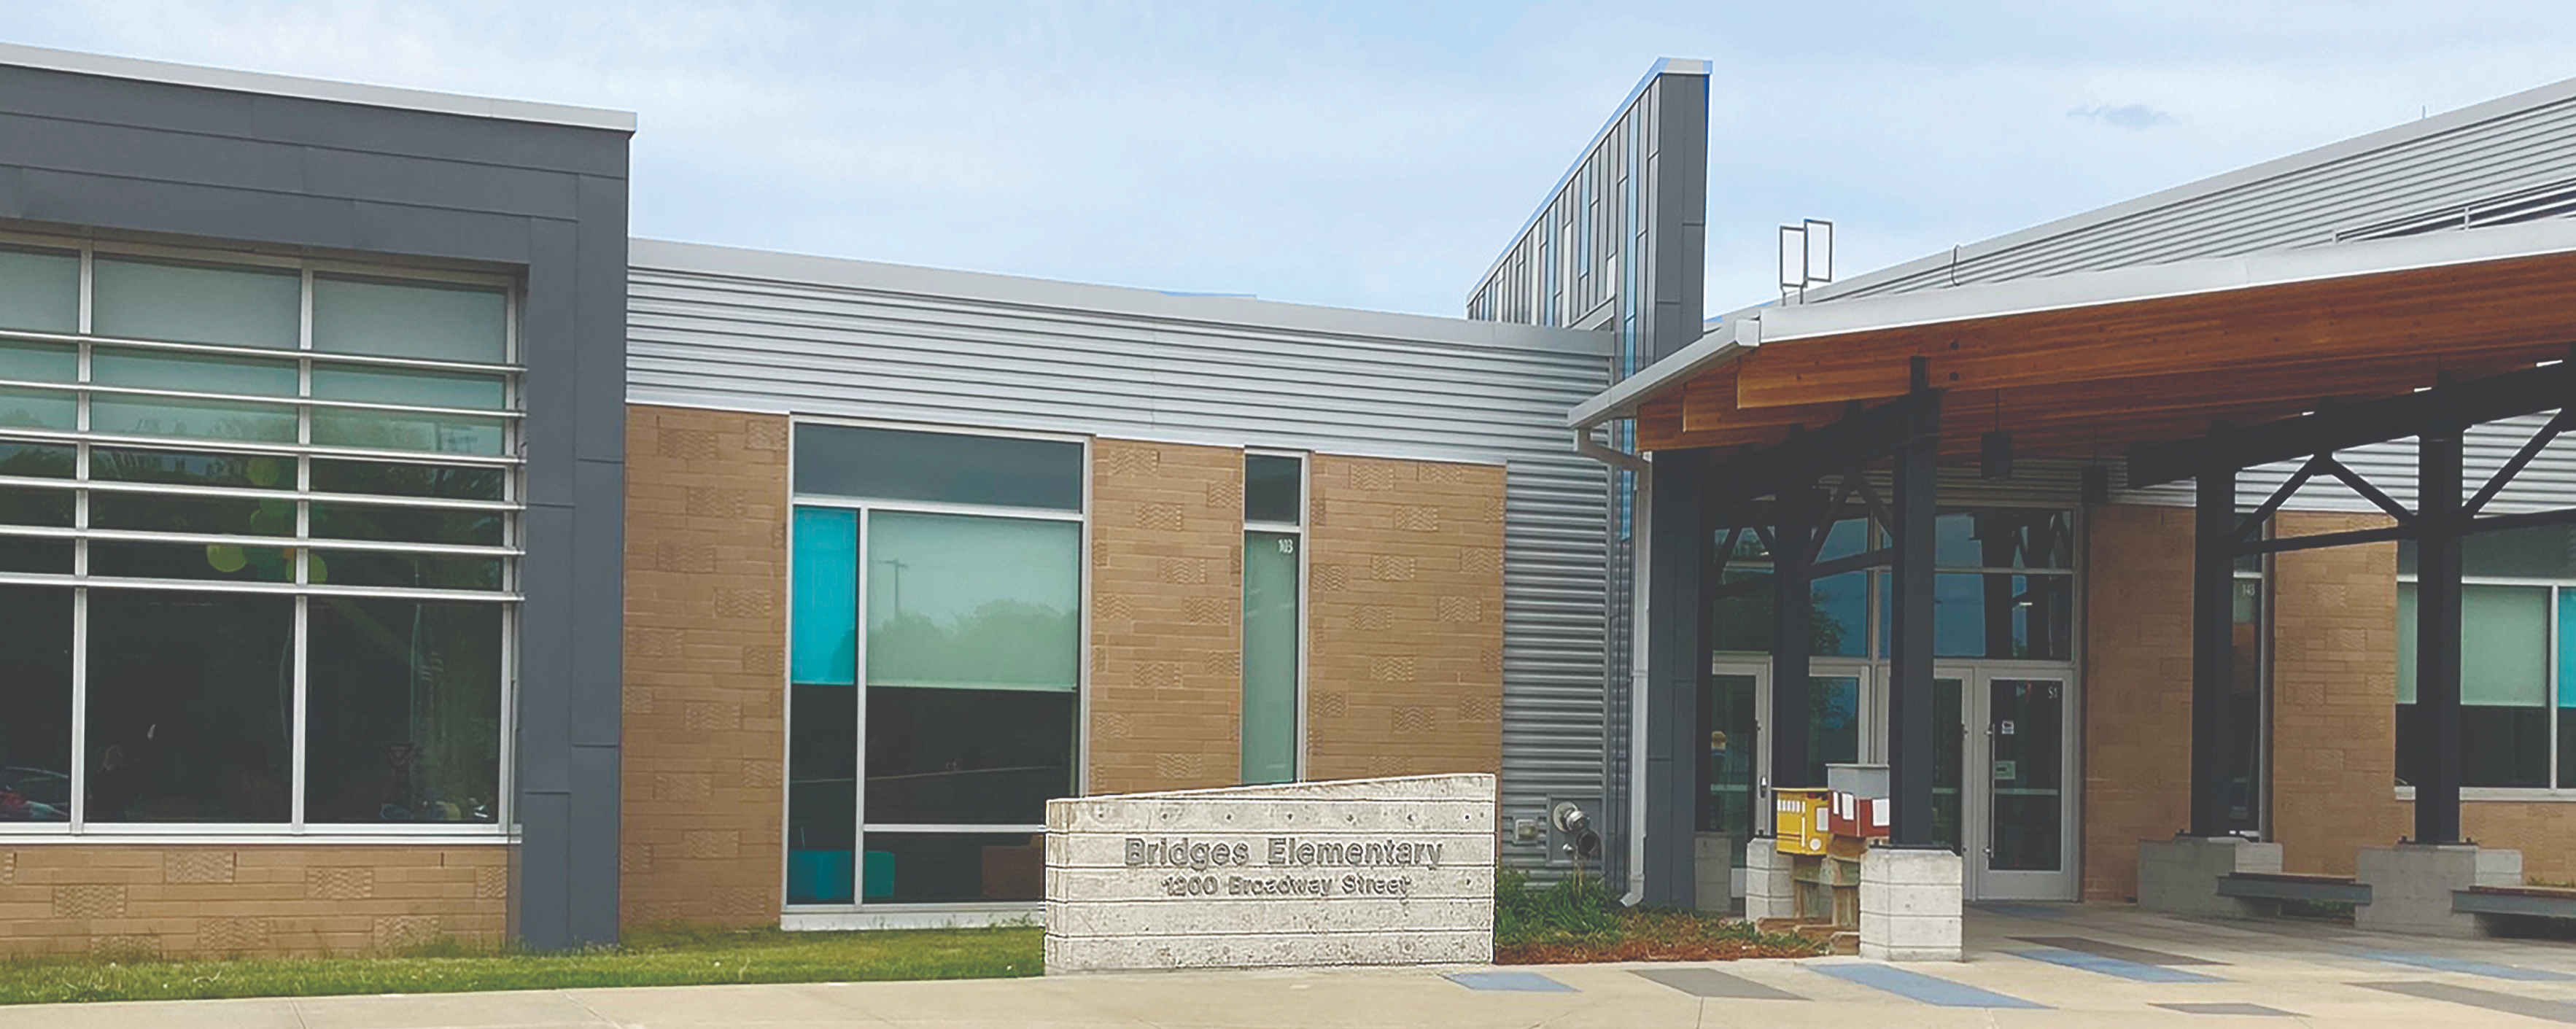 Bridges Elementary School Building